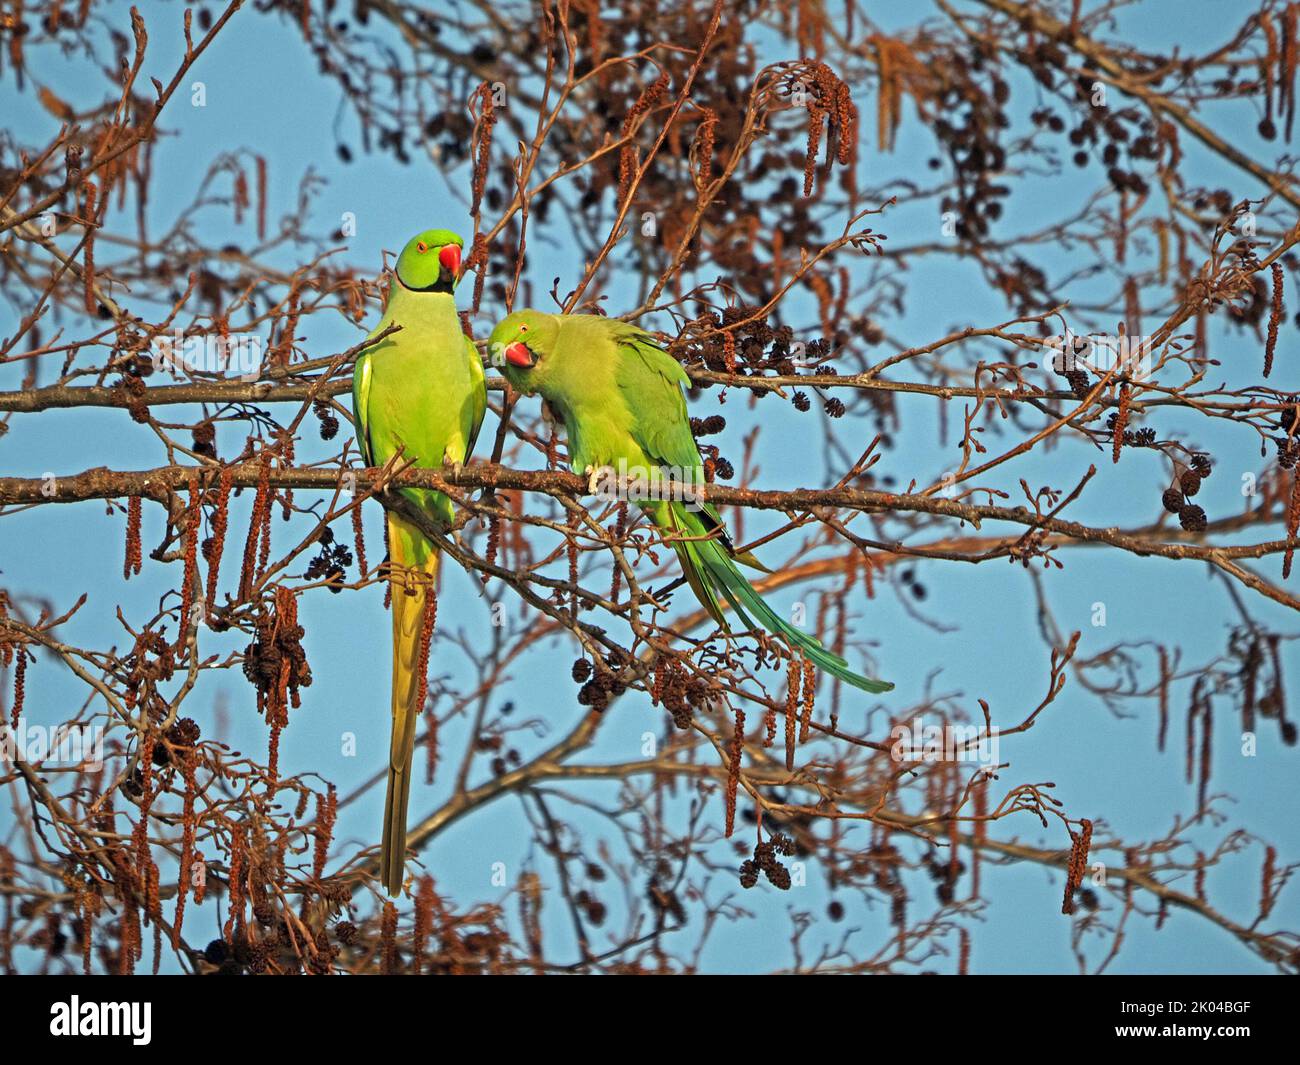 Par de parakeets de cuello anillado o parakeets de anillo rosado (Psittacula krameri) en Alder tree (Alnus glutinosa) Londres, Inglaterra, Reino Unido Foto de stock